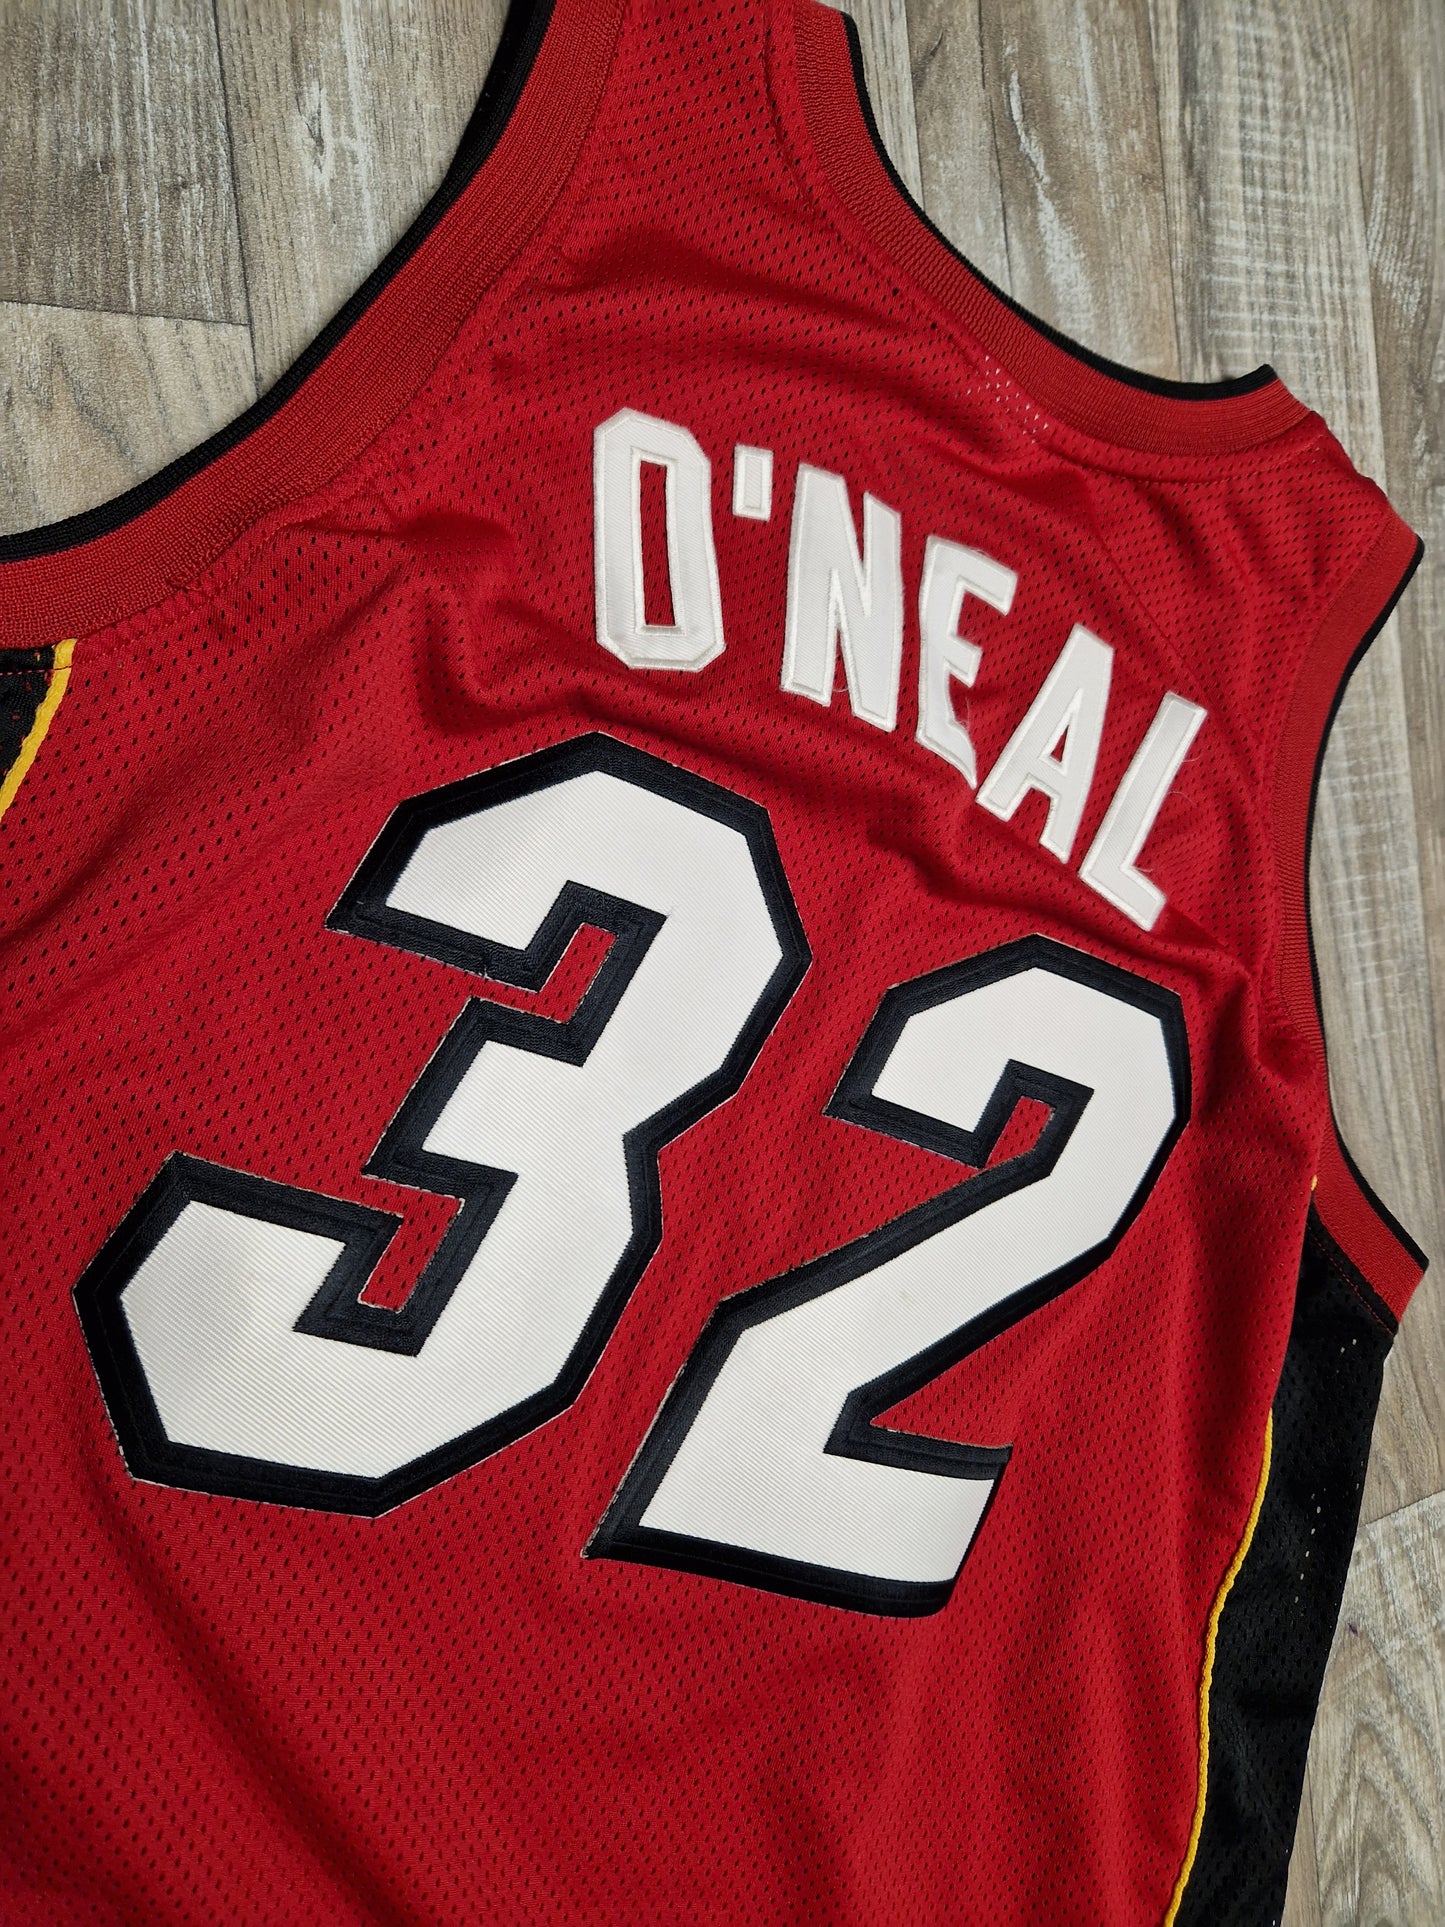 Shaquille O'Neal Miami Heat Jersey Size Medium